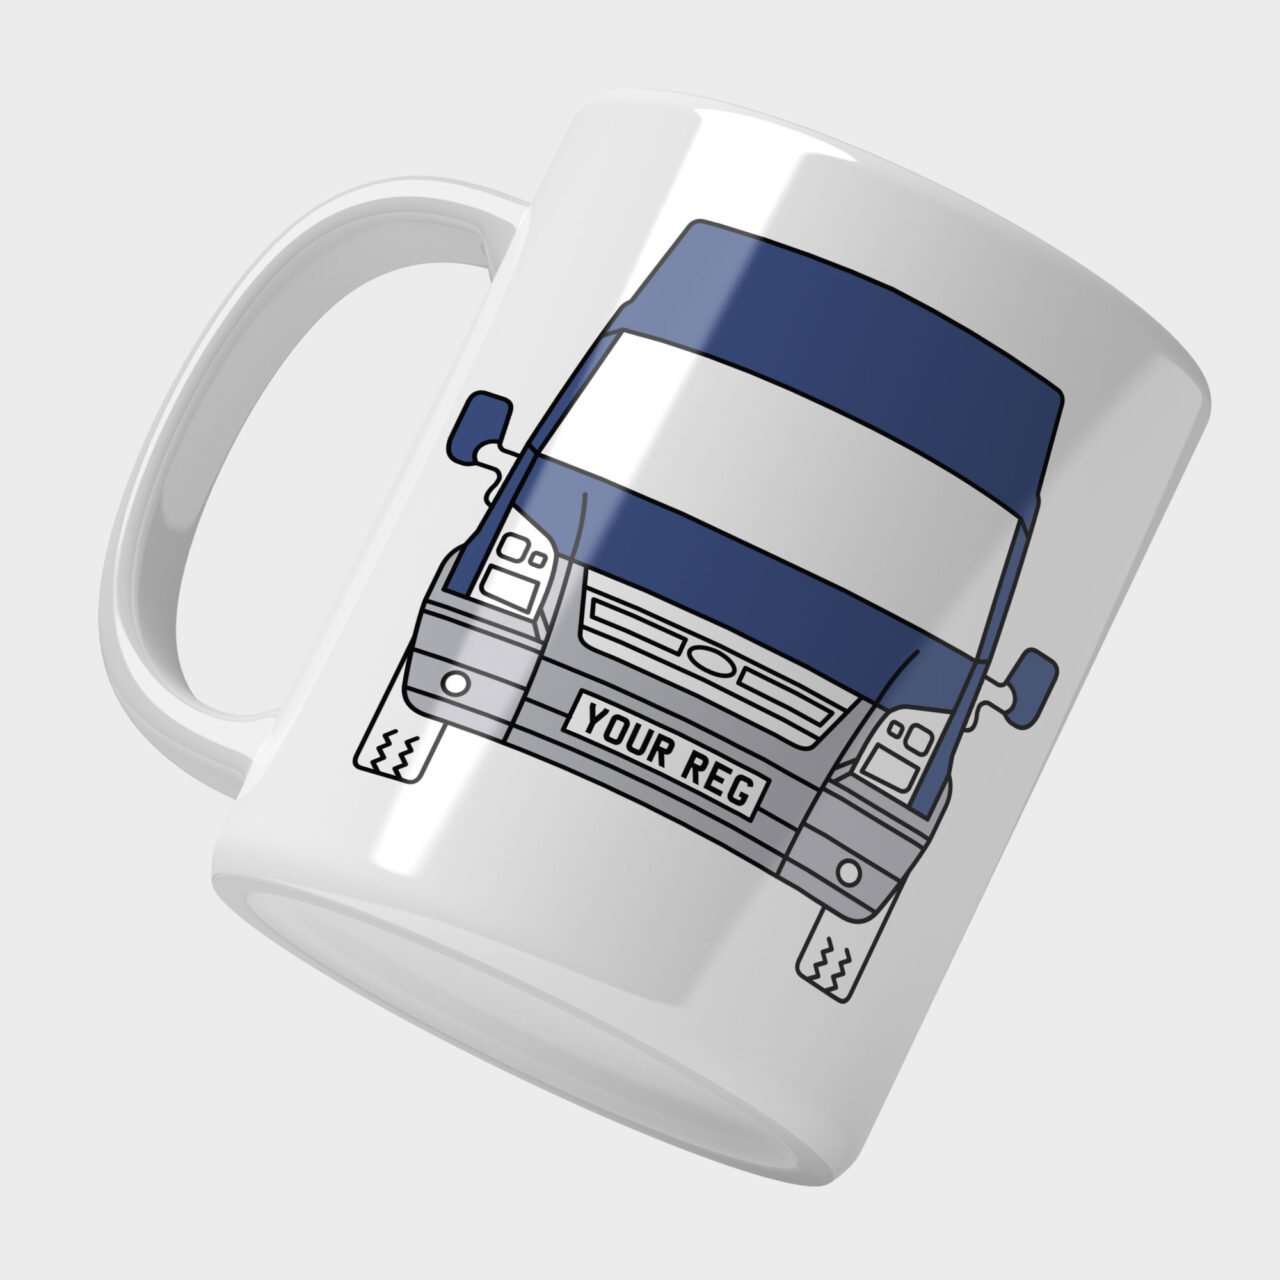 Ford Transit MK7 Personalised Campervan Mug Cup Gift